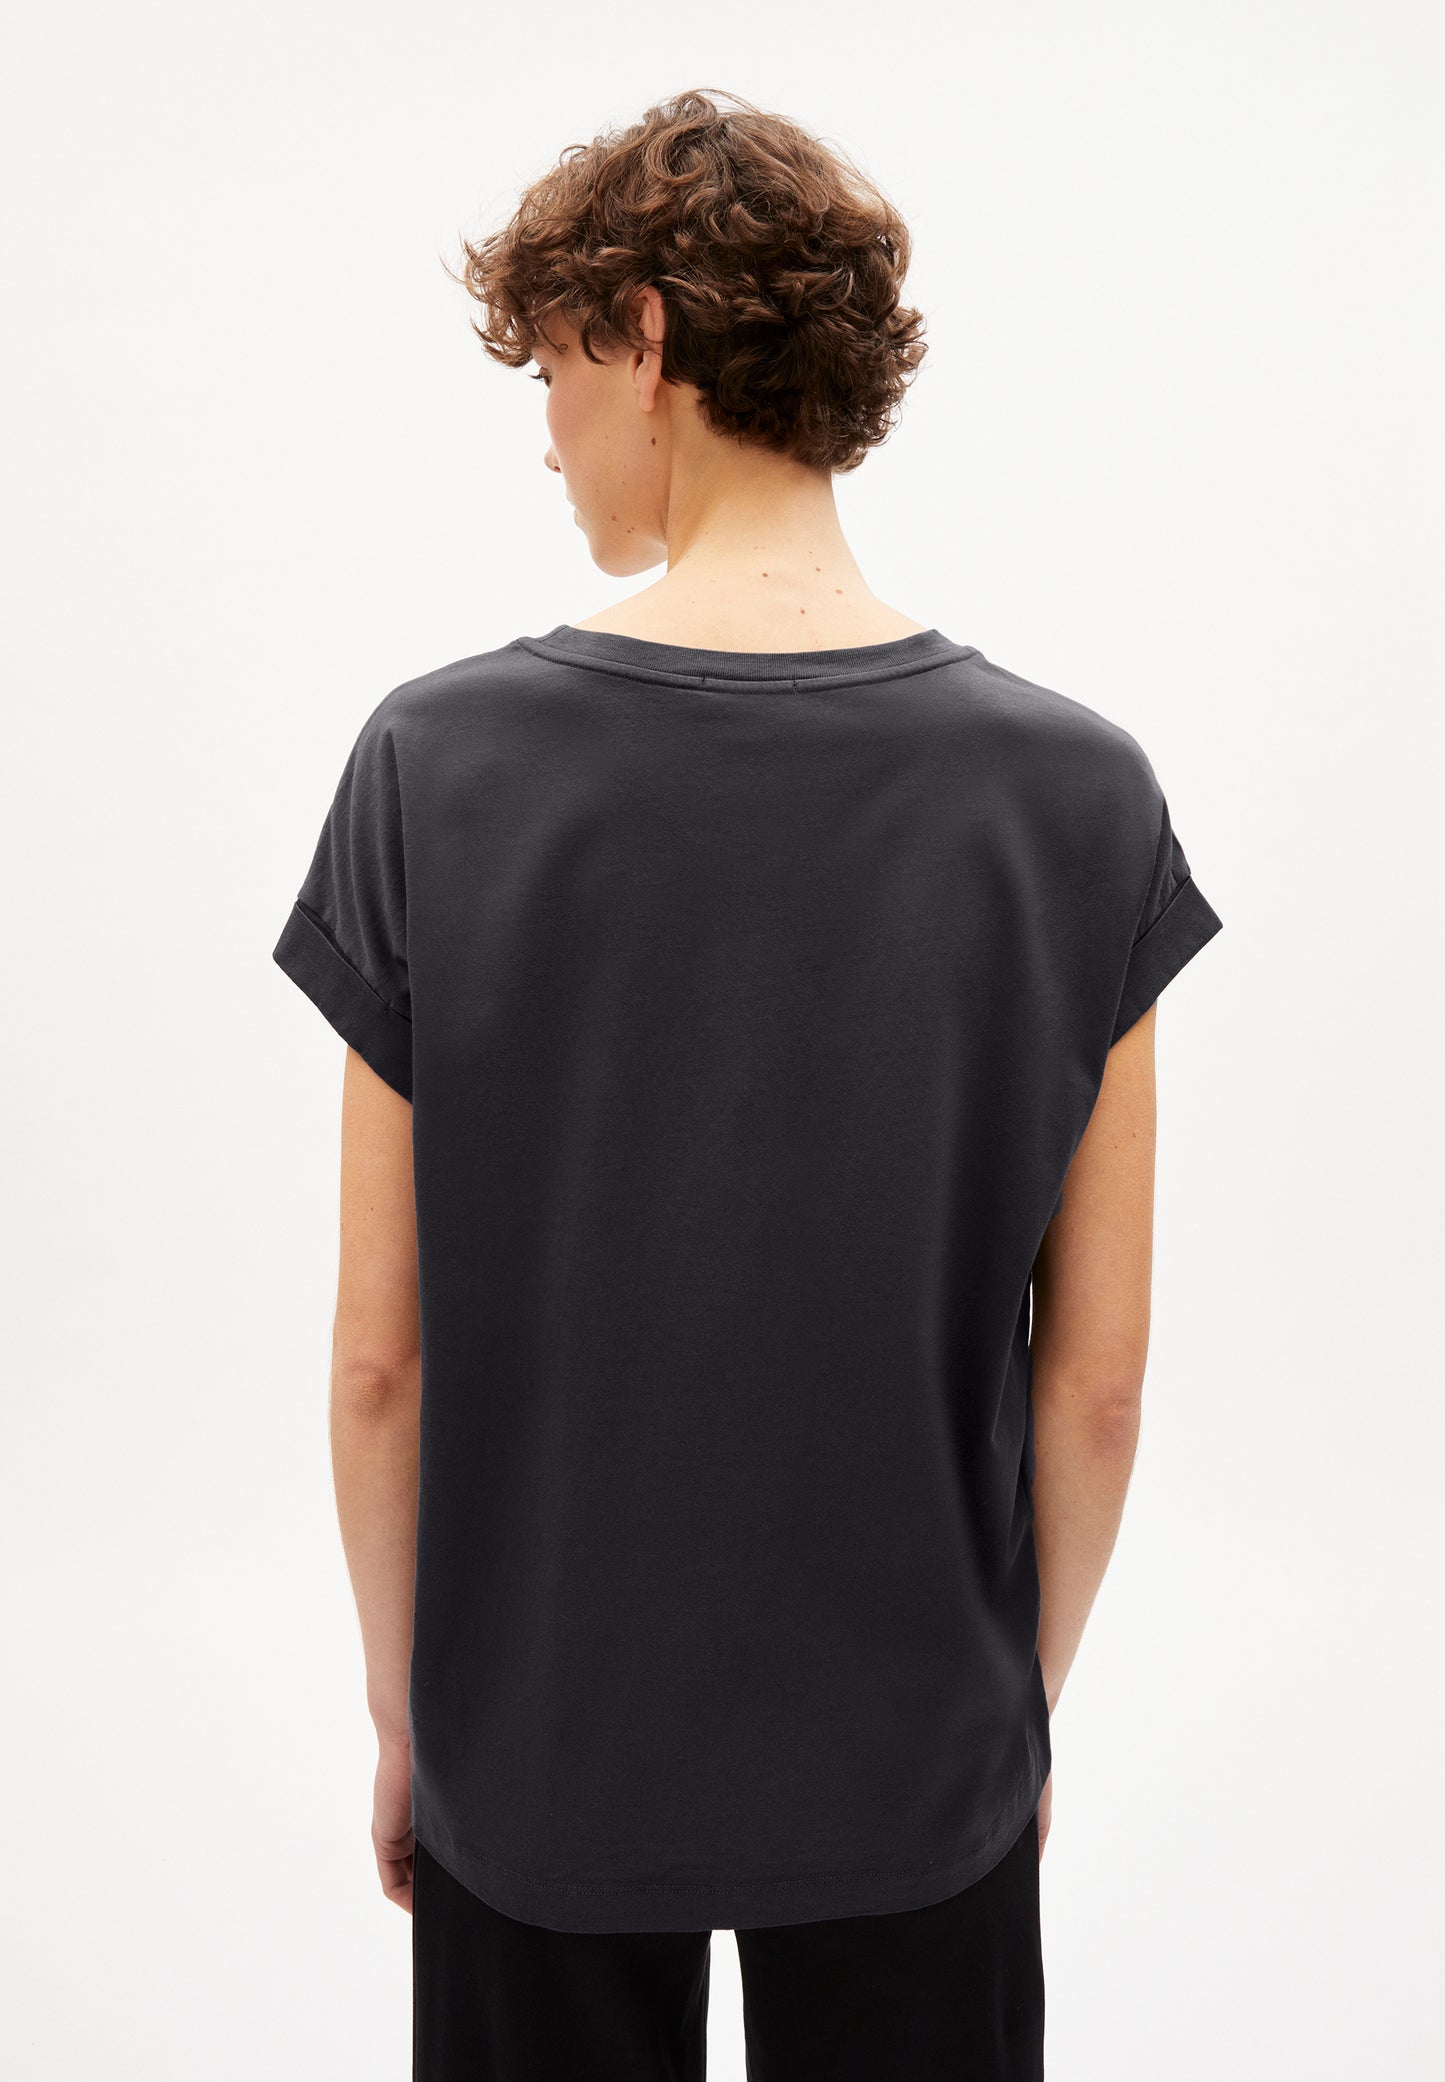 IDAARA Shirts T-Shirt Solid, graphite